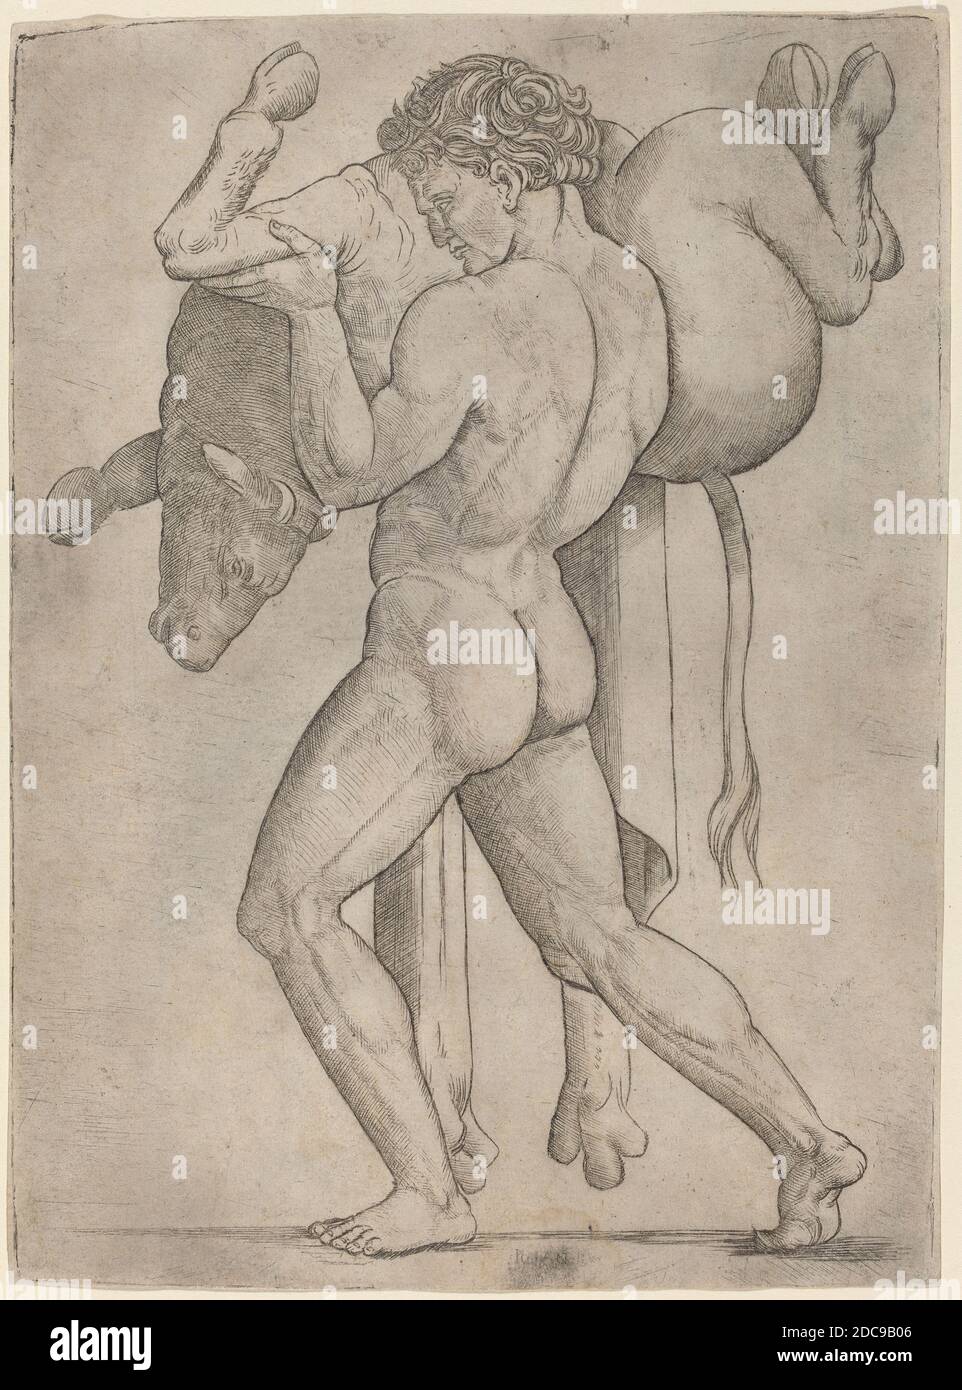 Giovanni Antonio da Brescia, (artist), Italian, active c. 1490 - 1525 or after, Hercules and the Cretan Bull, c. 1514/1515, engraving, sheet: 21.4 x 15.7 cm (8 7/16 x 6 3/16 in Stock Photo